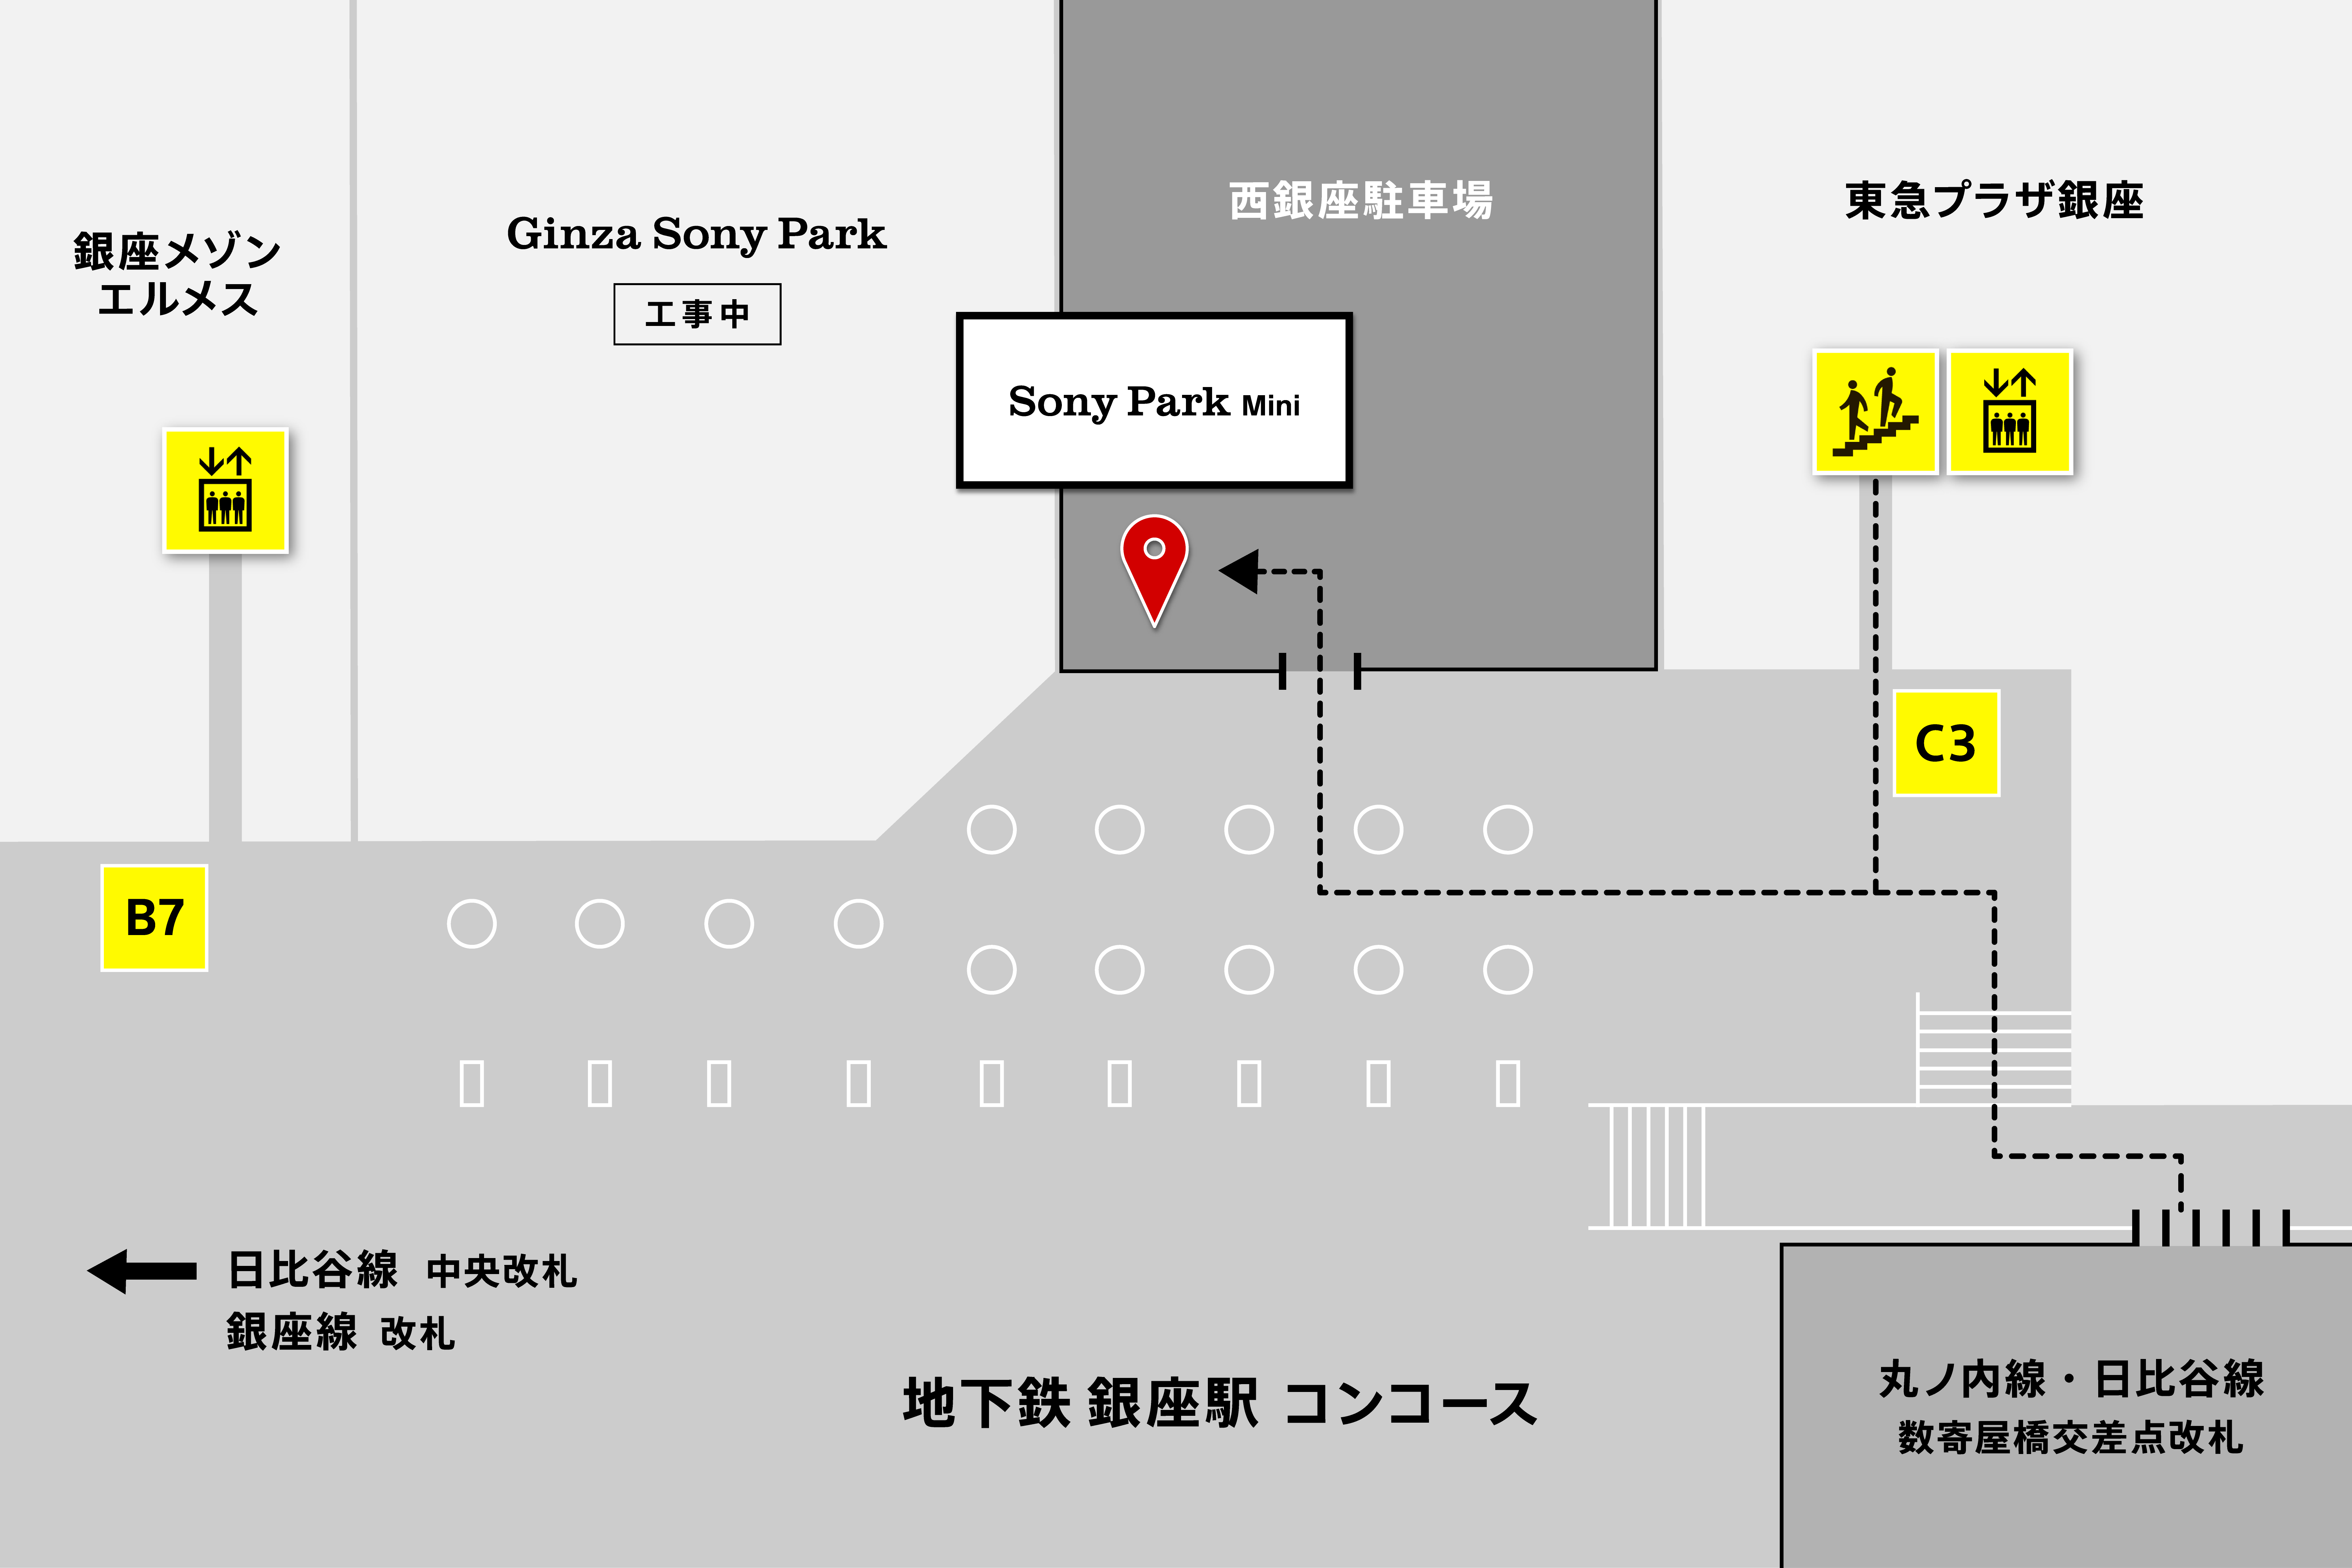 Sony Park Mini へのアクセスマップ